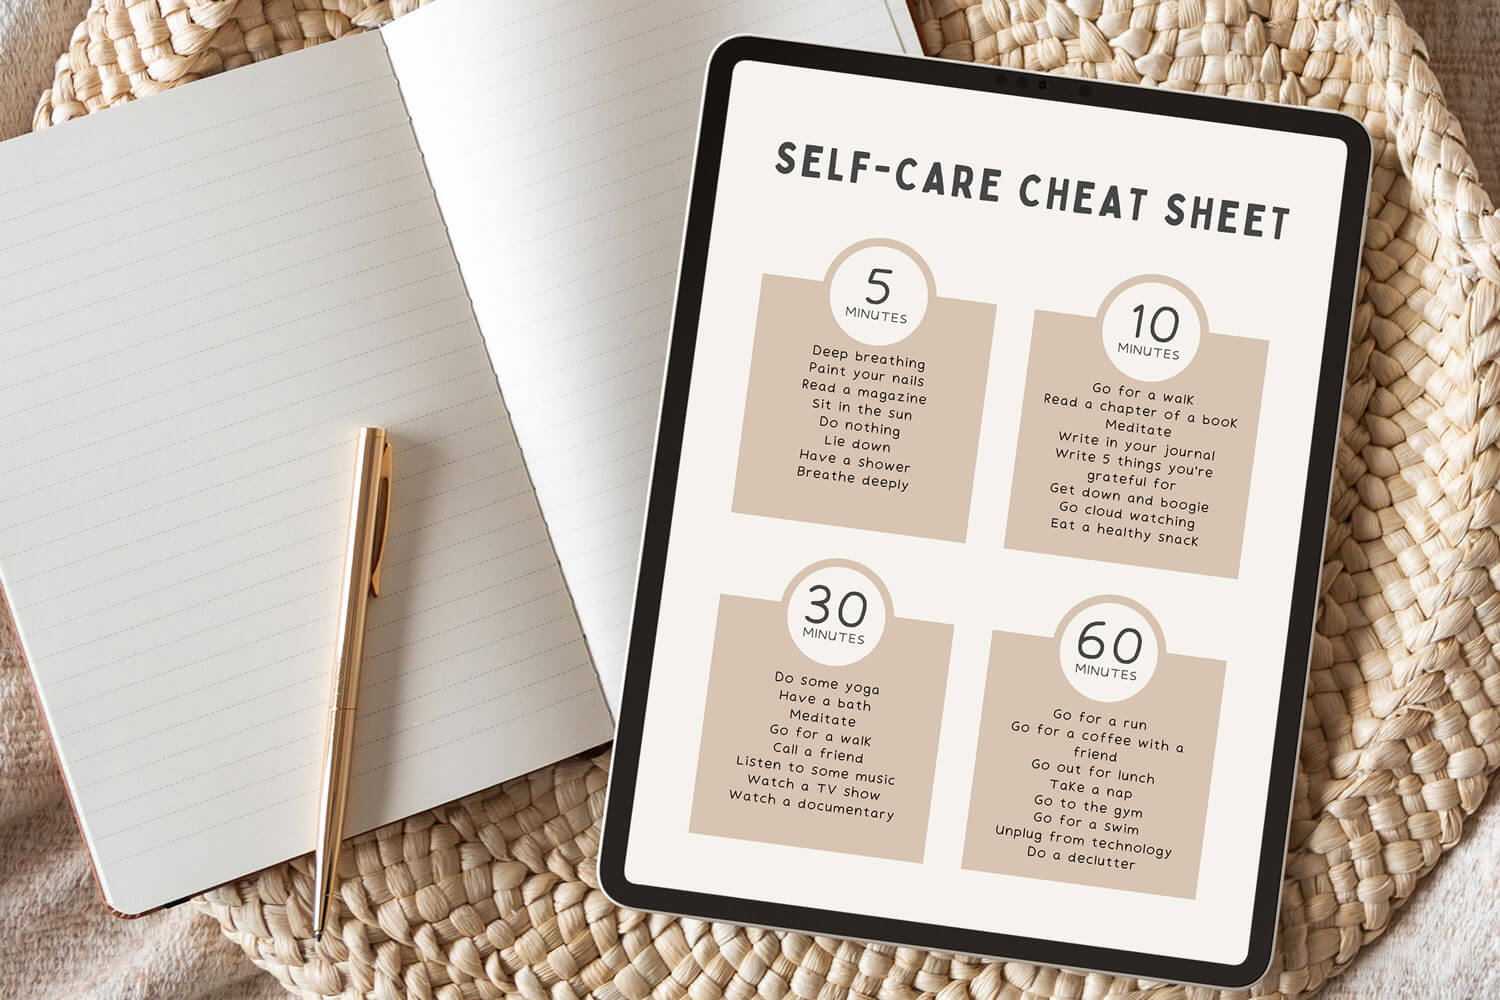 self care cheat sheet canva template<br />
canva templates for coaches<br />
coaching canva templates<br />
